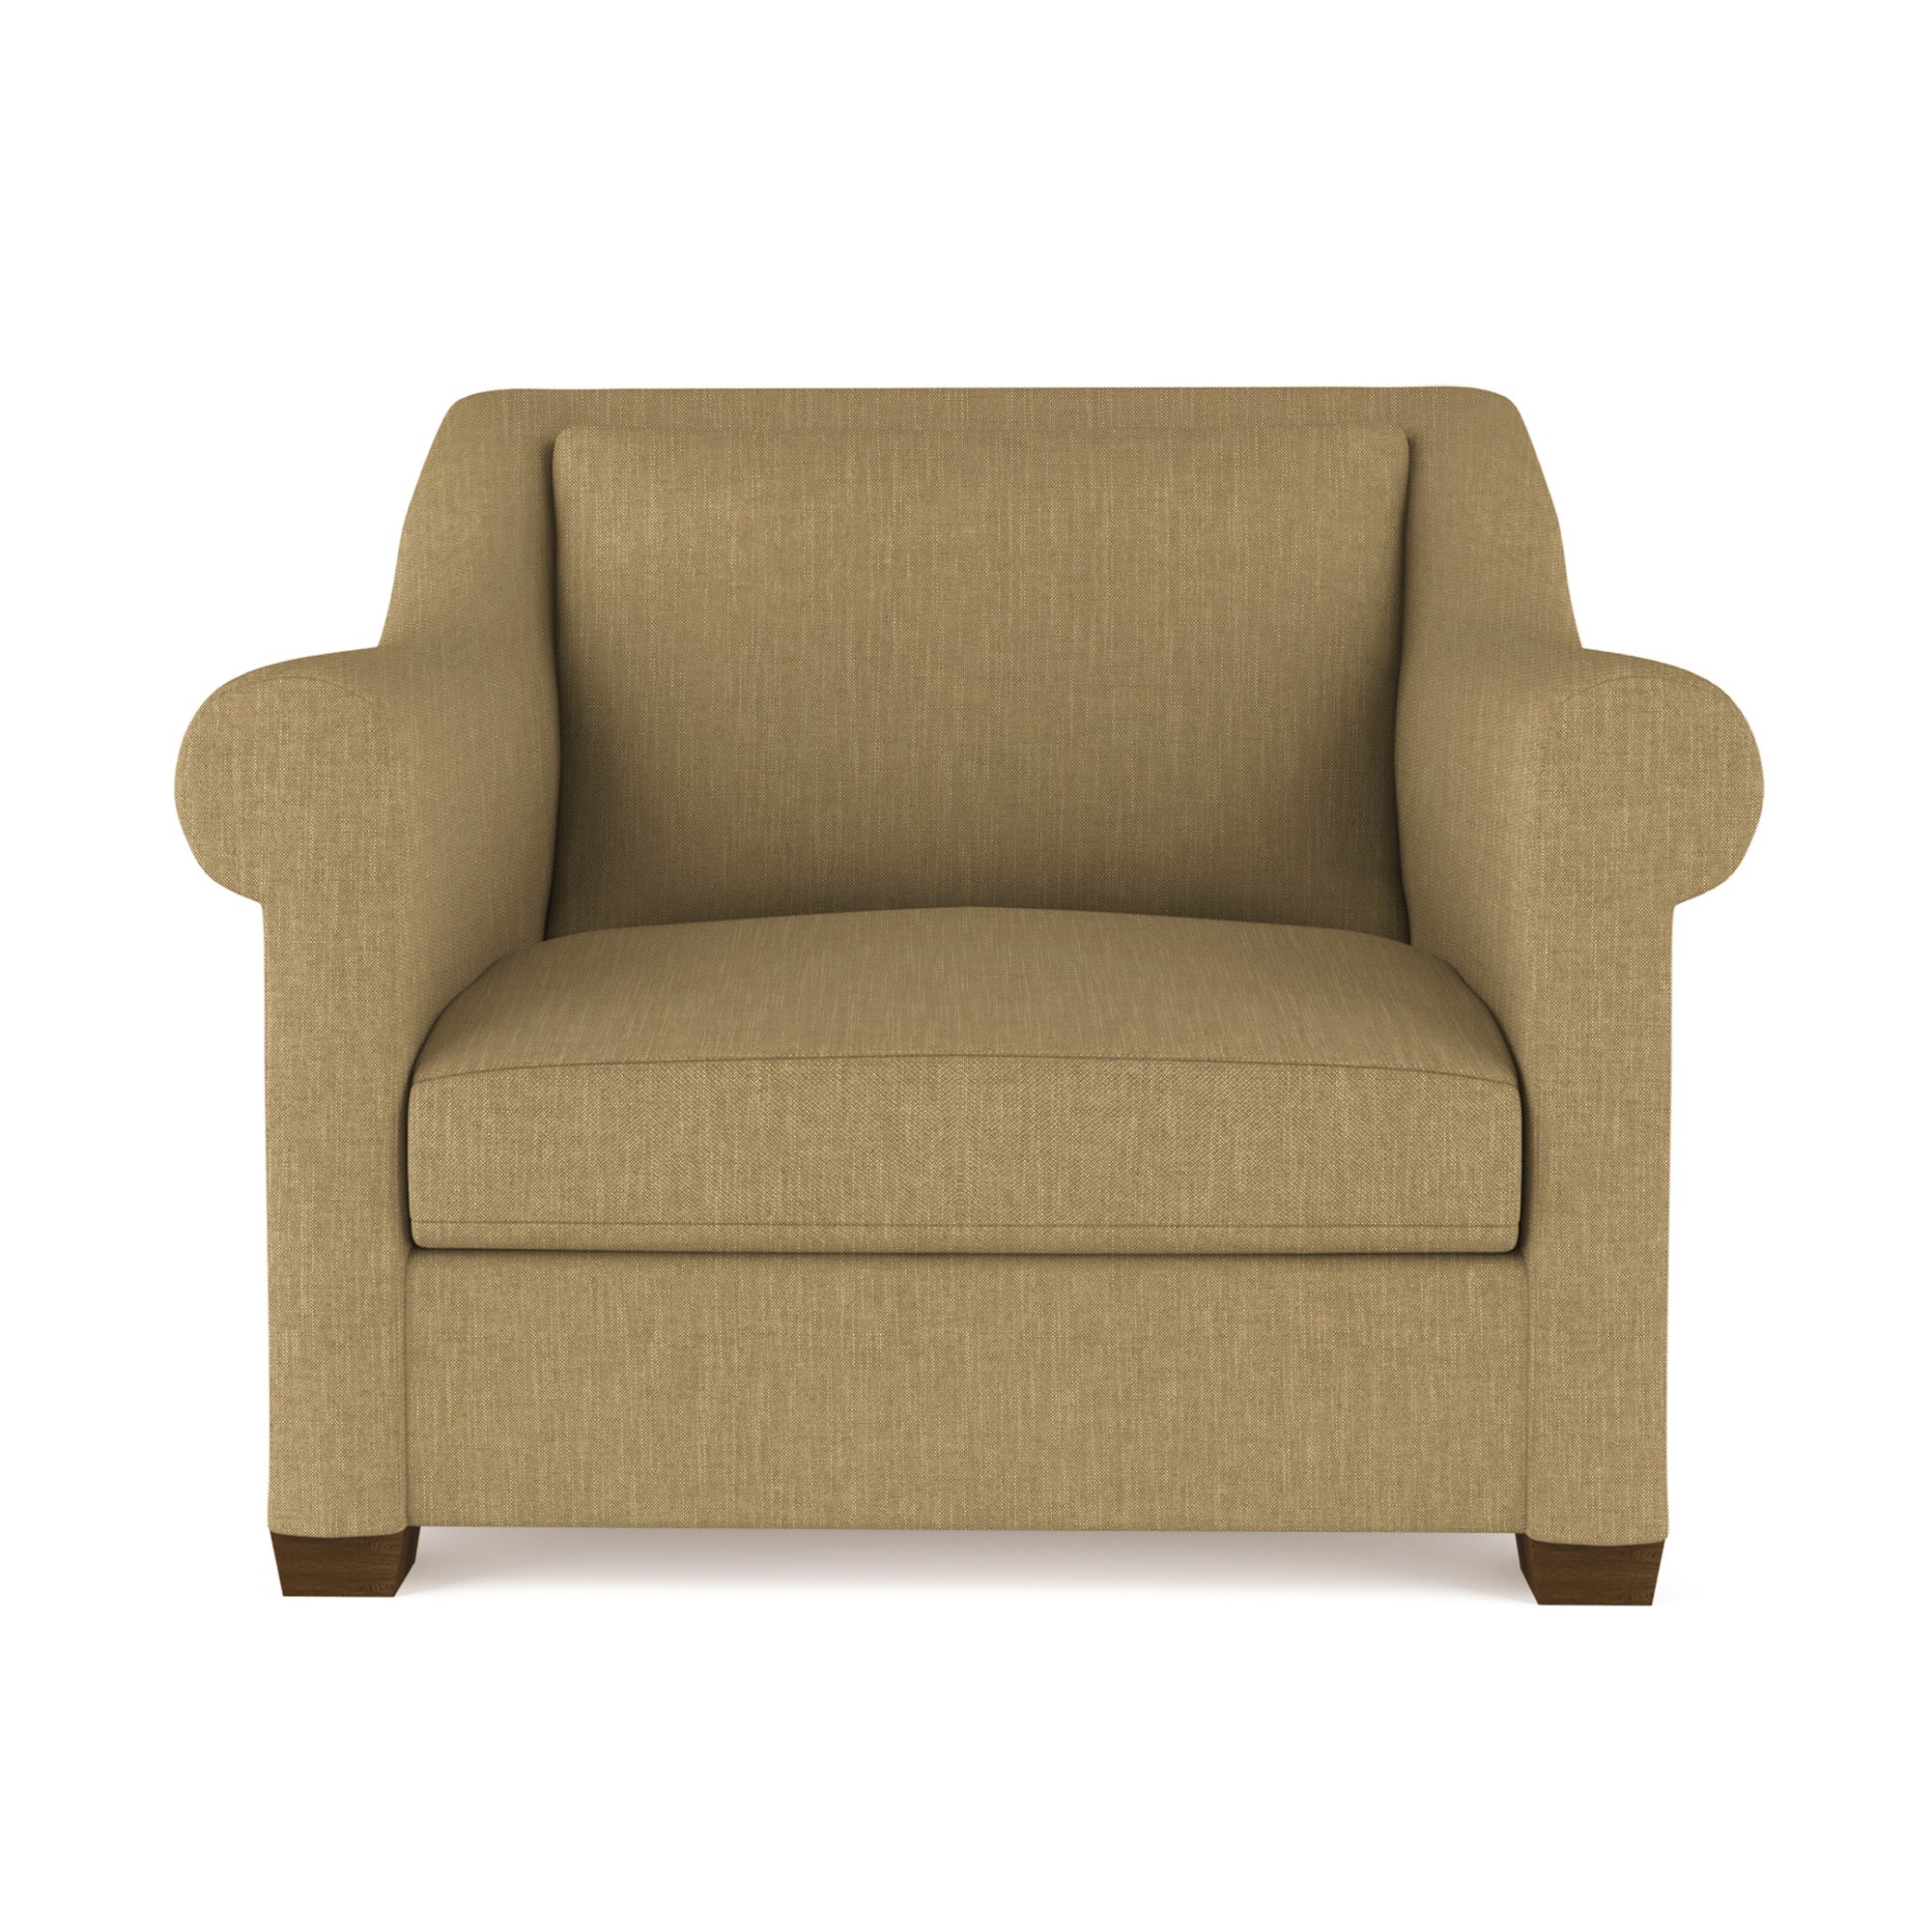 Thompson Chair - Marzipan Box Weave Linen